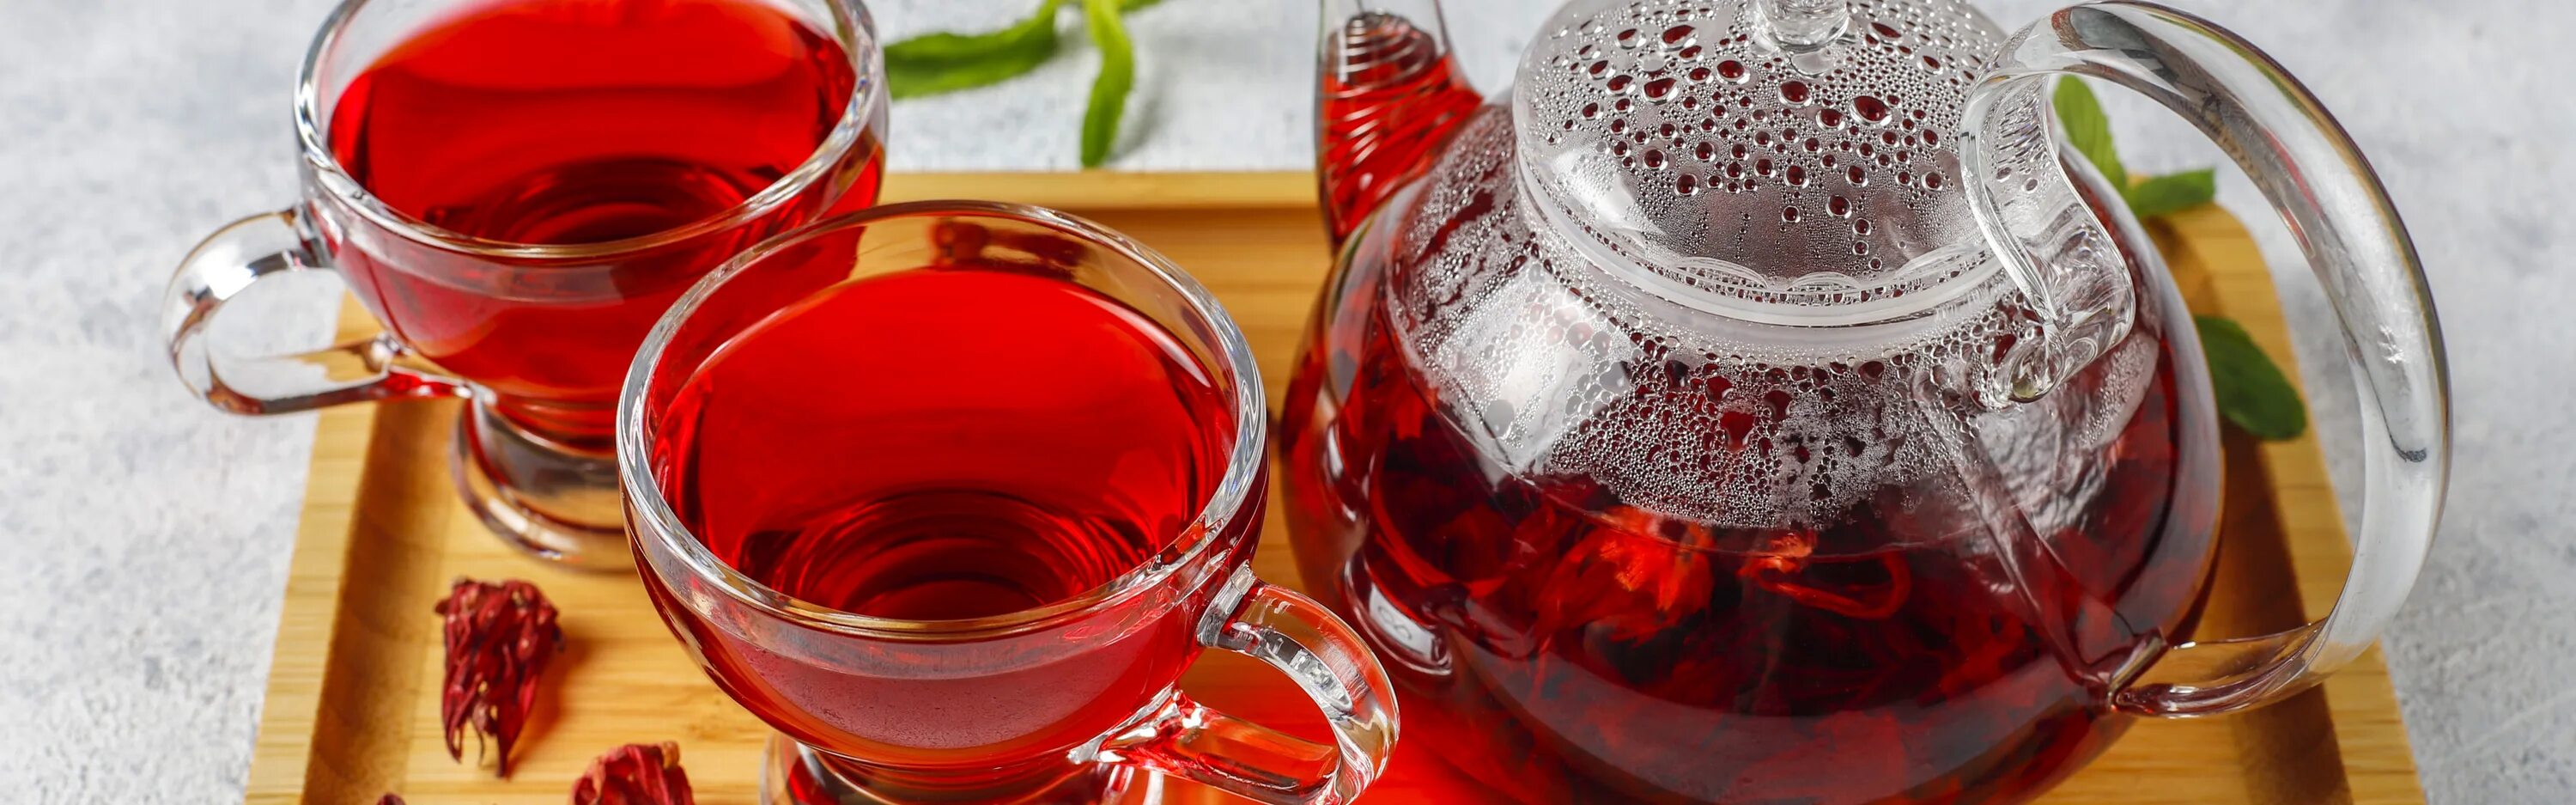 Красный чай каркаде. Чашка чая каркаде. Чай "каркаде". Кружка каркаде. Фруктовый каркаде